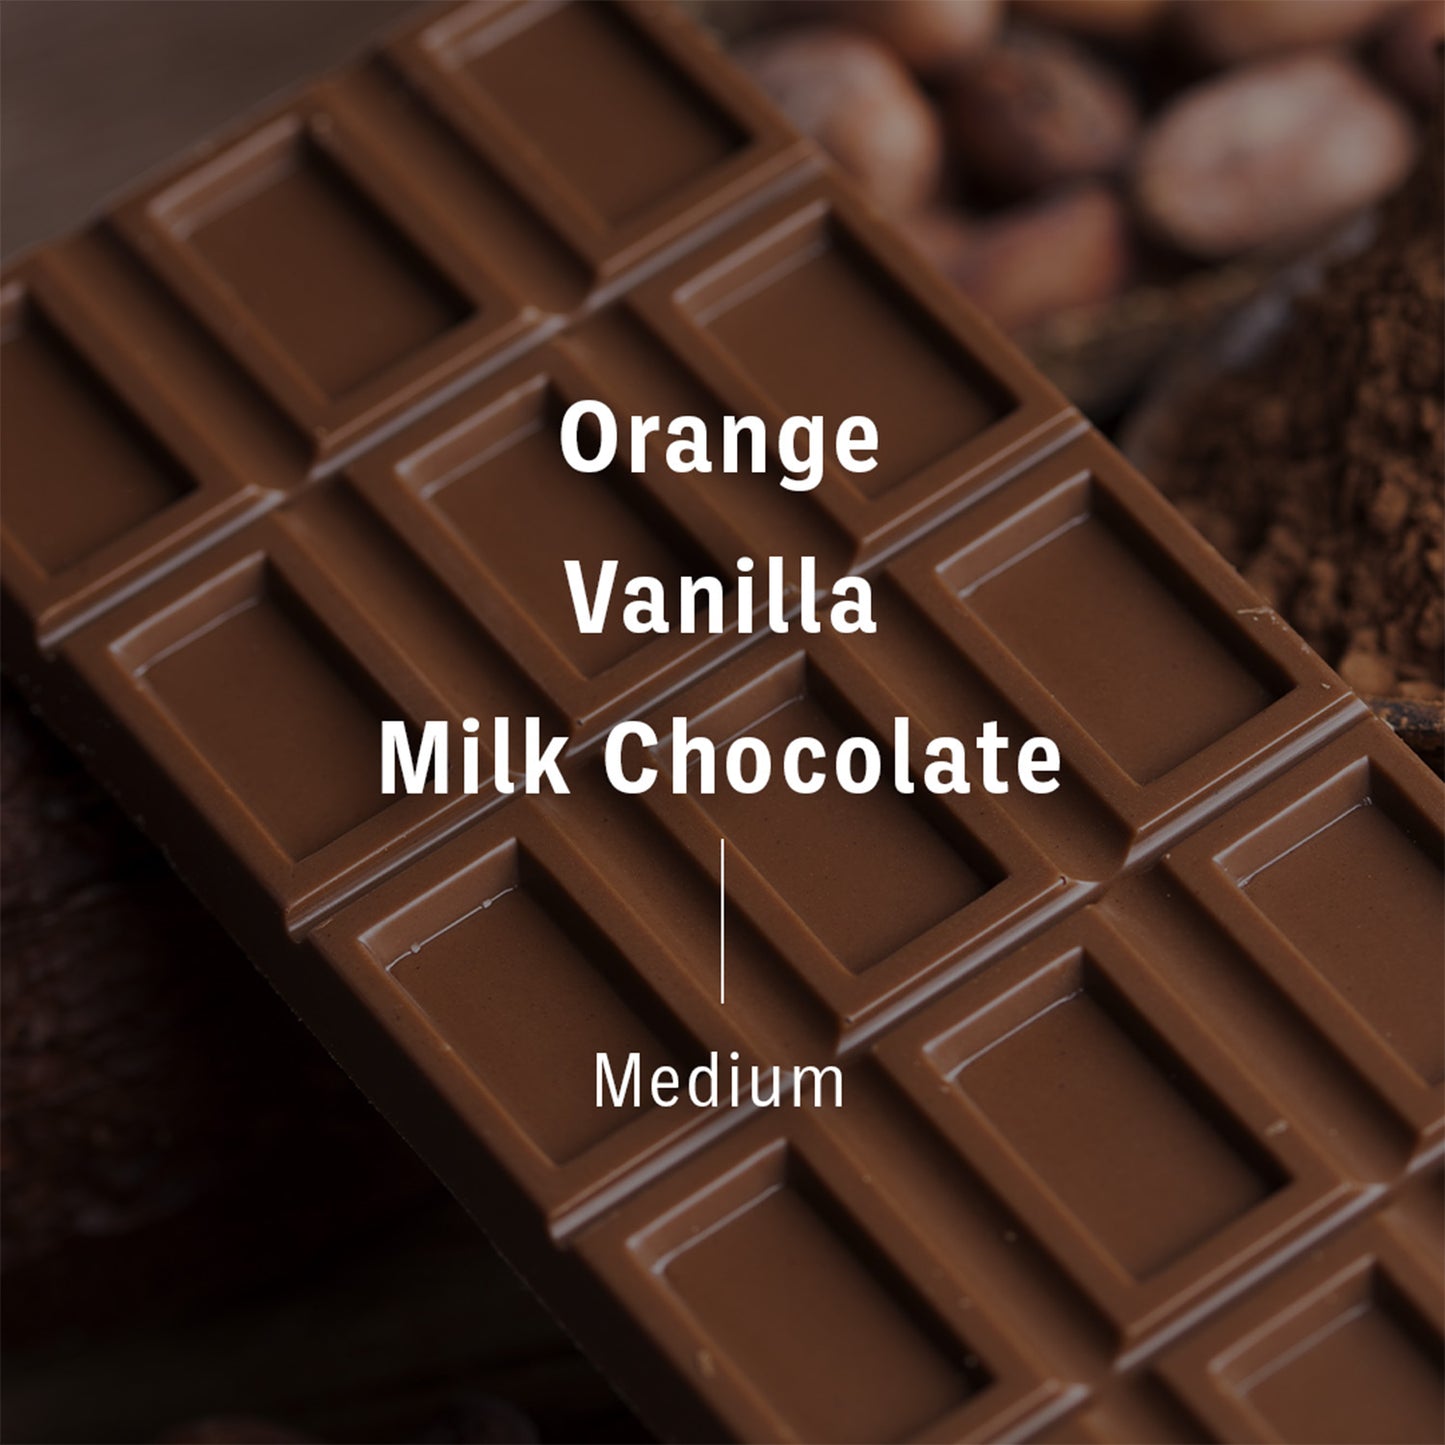 Flavor notes of Floresta coffee blend on picture of chocolate. Flavor text reads orange, vanilla, milk chocolate, and medium.